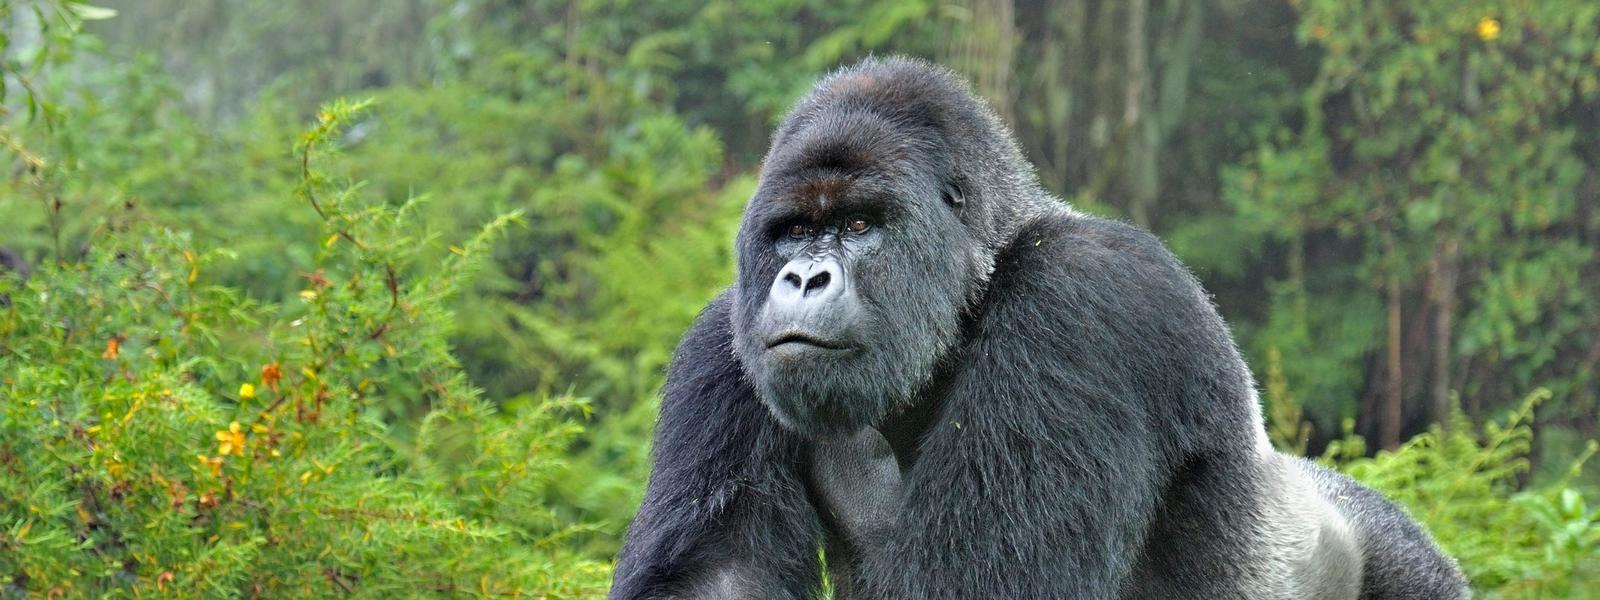 mountain gorilla in Bwindi Impenetrable National Park: The famous mountain gorilla trekking safari destination